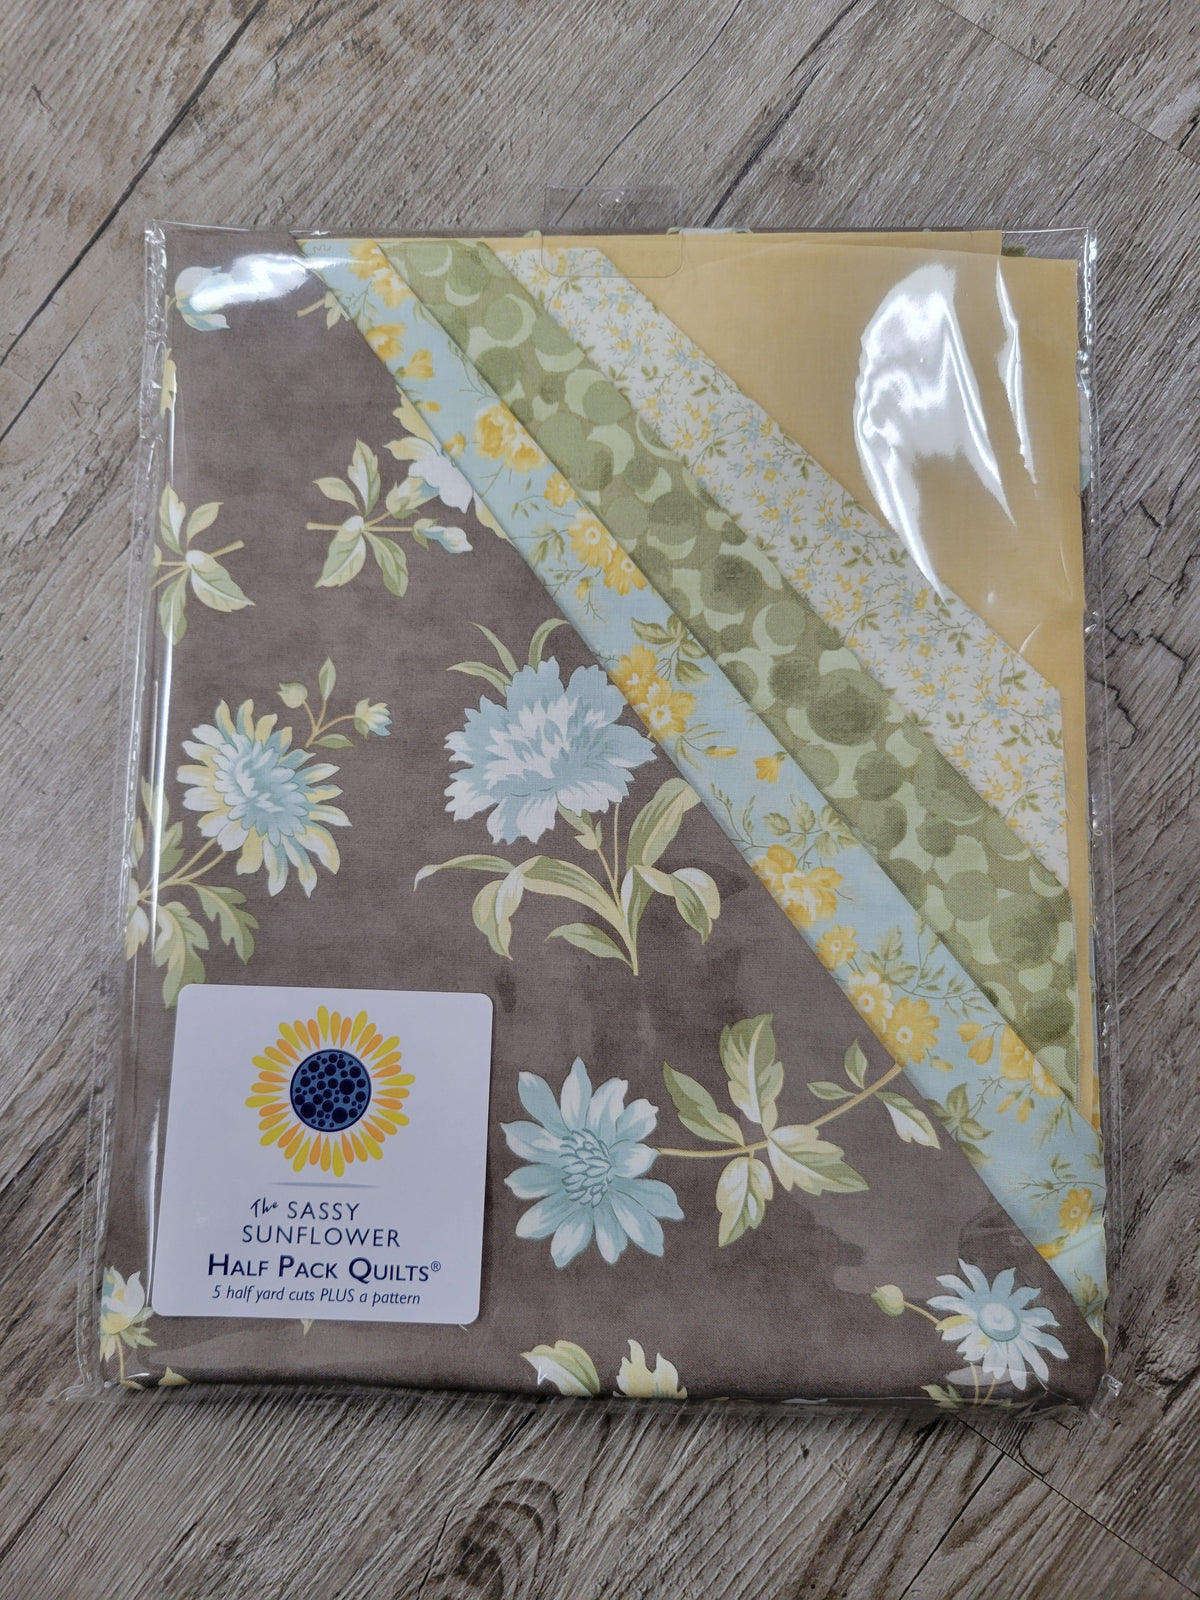 Honeybloom - The Sassy Sunflower Half Pack Quilts™ Kit